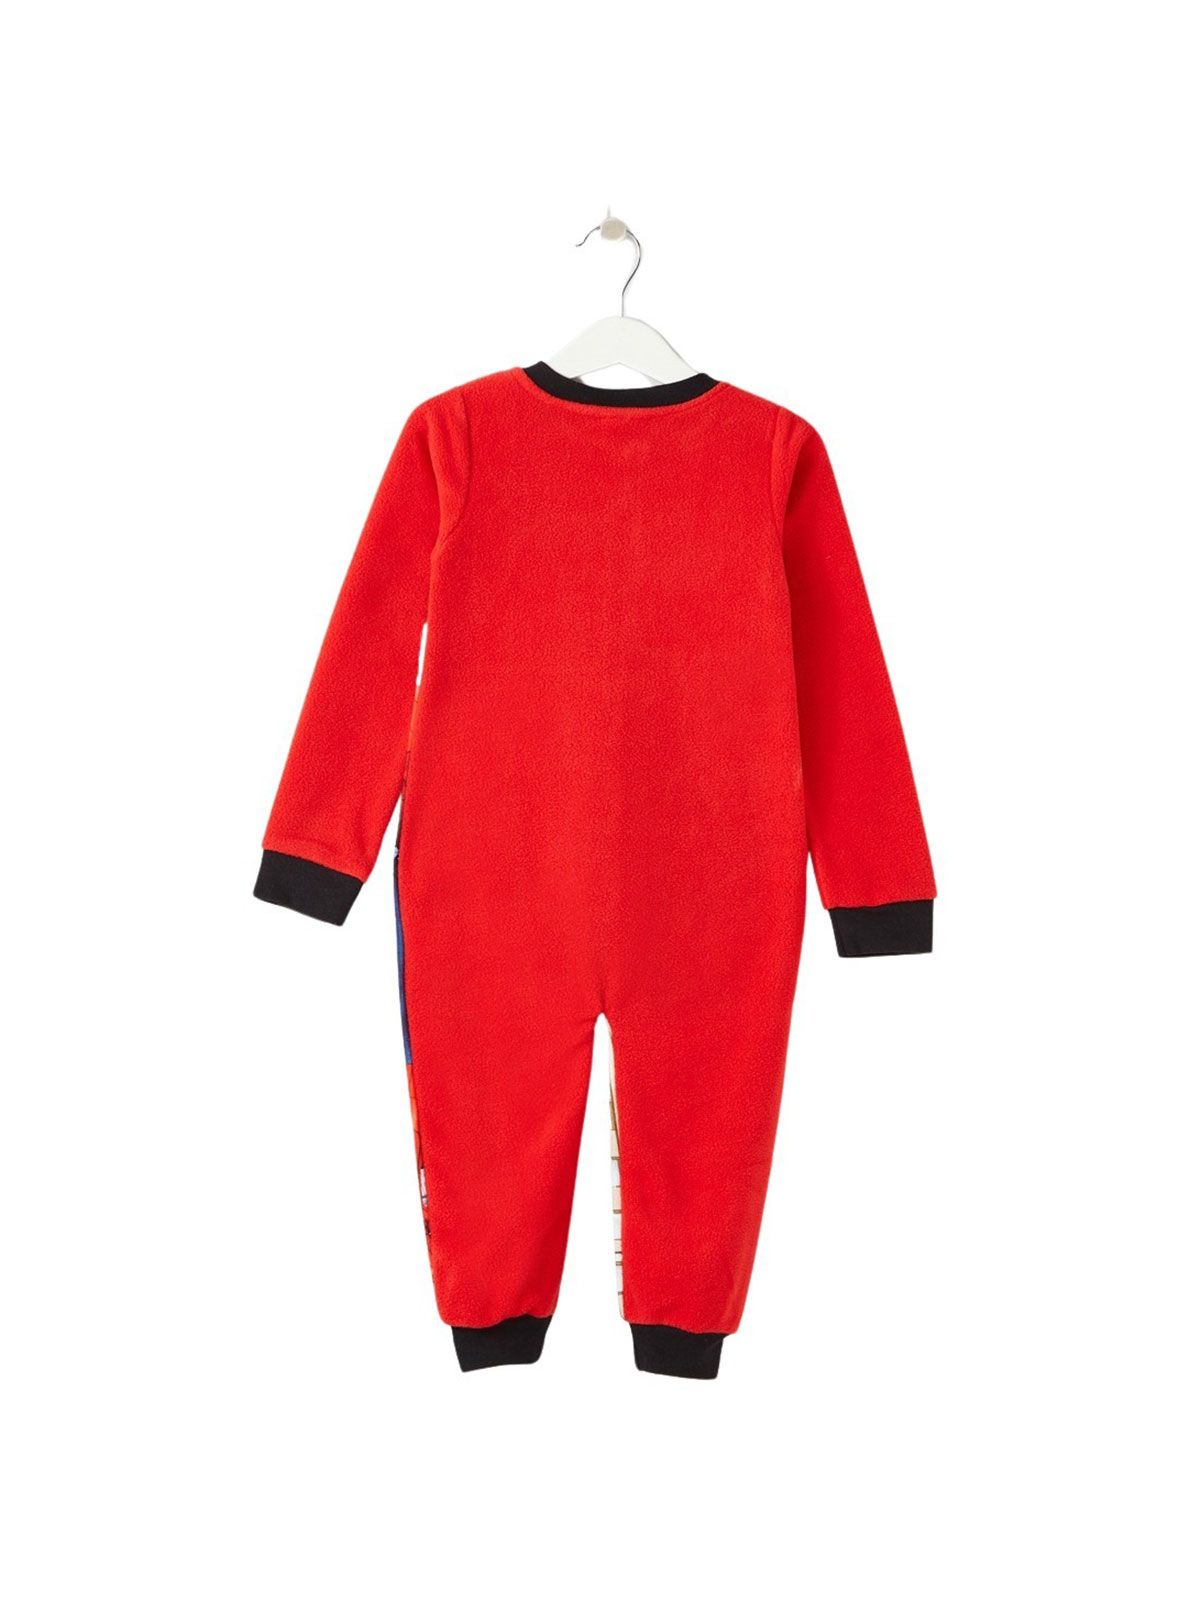 Spiderman Fleece-Pyjama-Overall